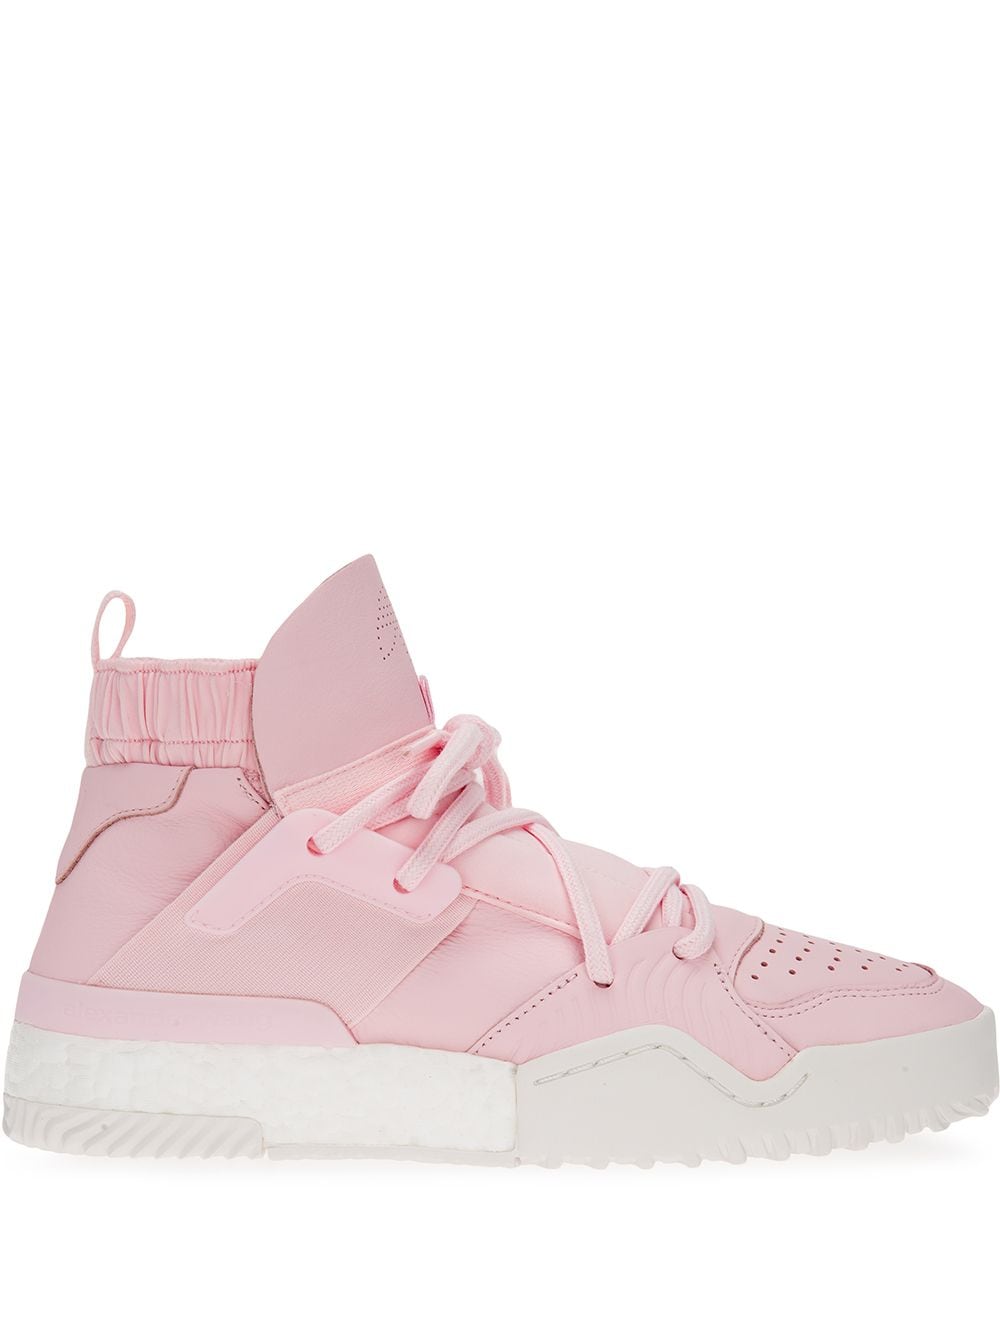 adidas x Alexander Wang Bball sneakers - Pink von adidas